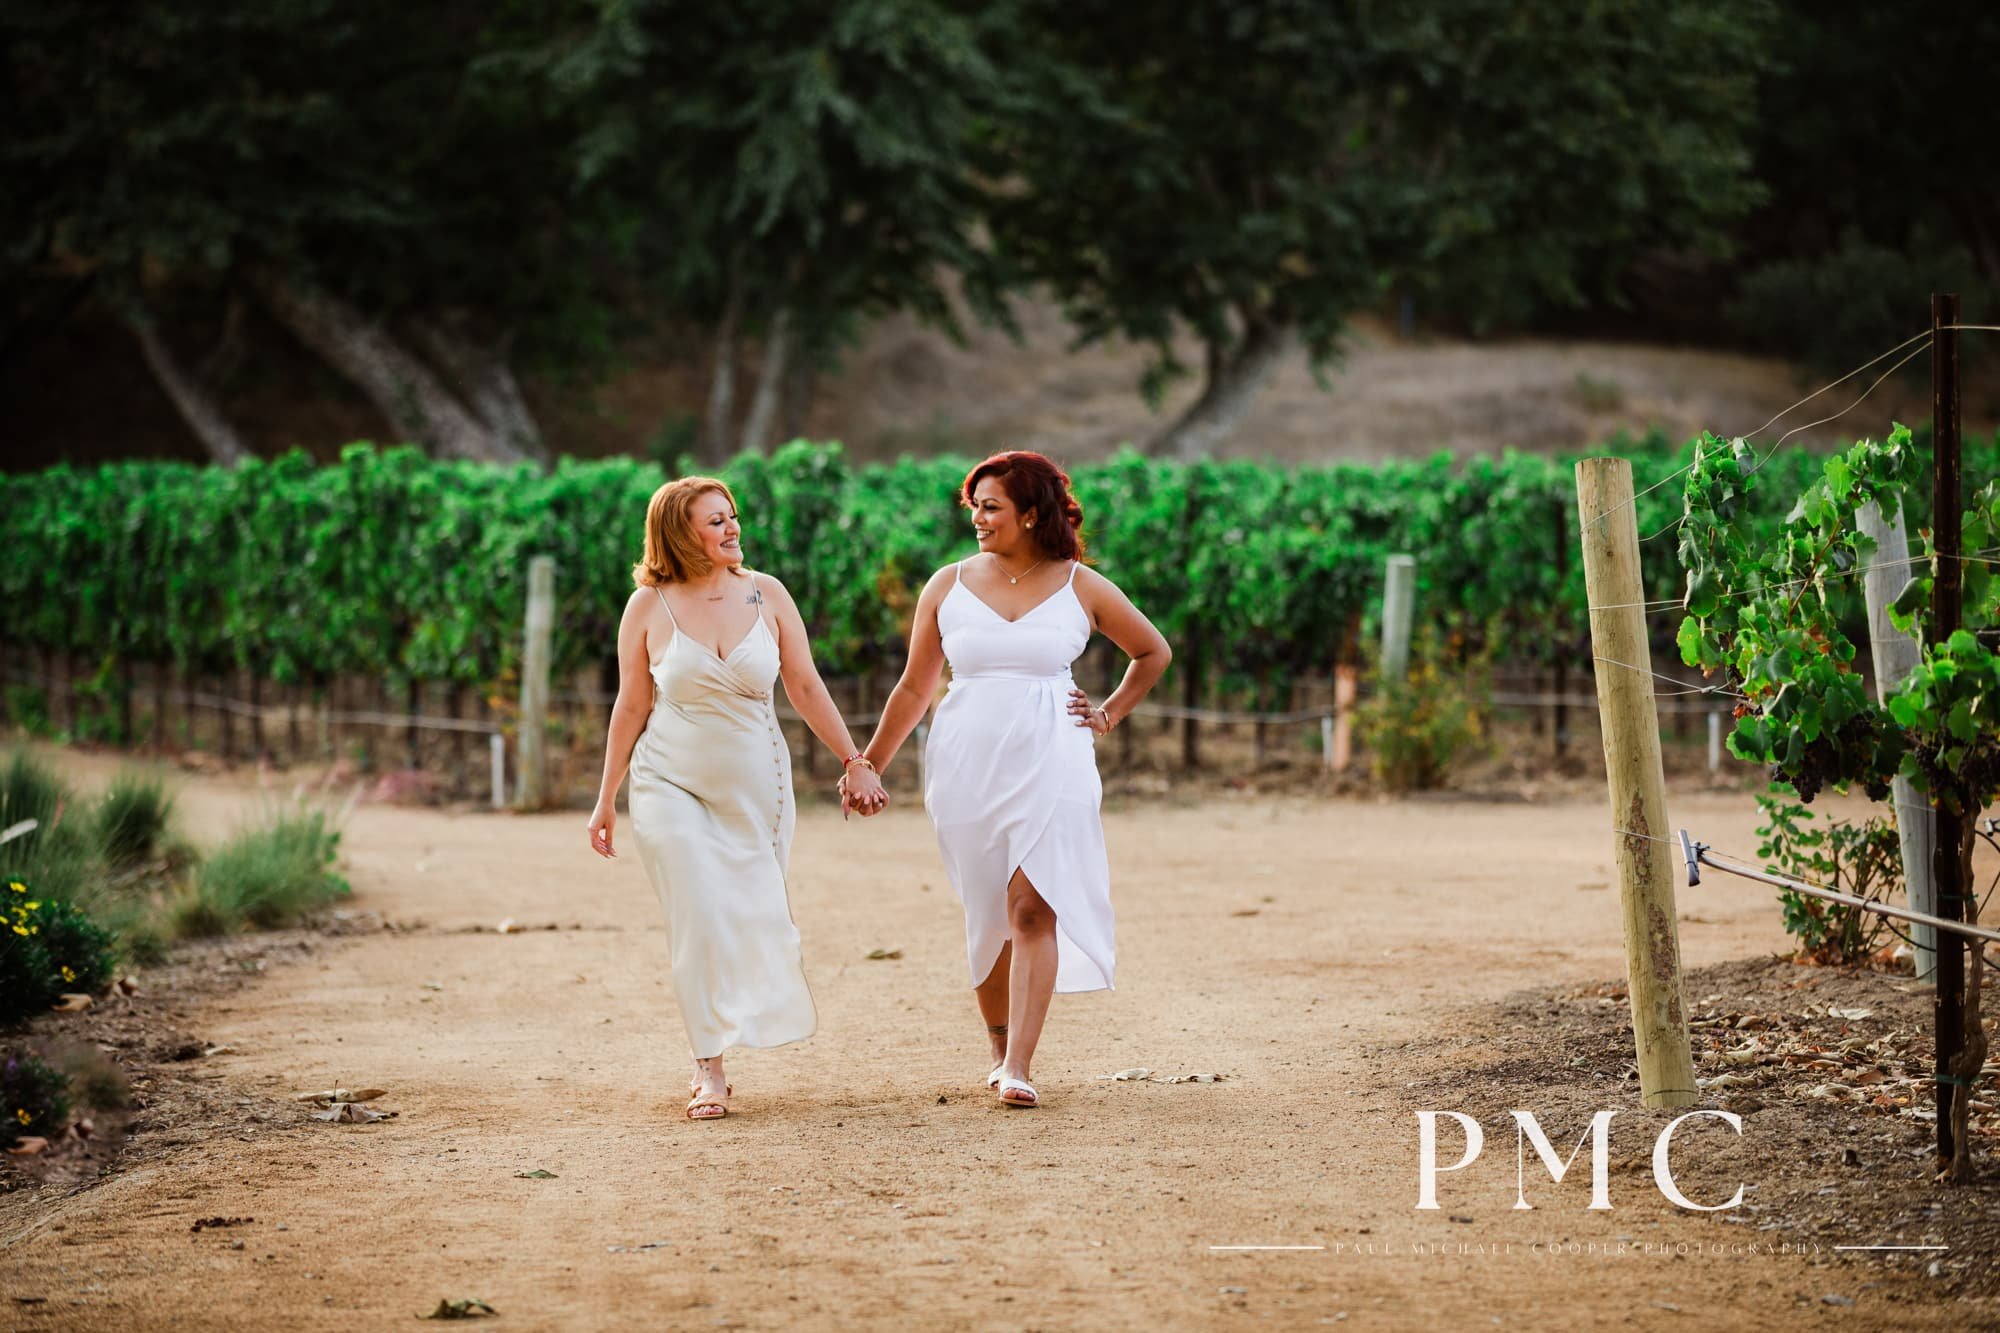 Monserate Winery LGBTQ+ Engagement Session - Best San Diego Wedding Photographer-14.jpg